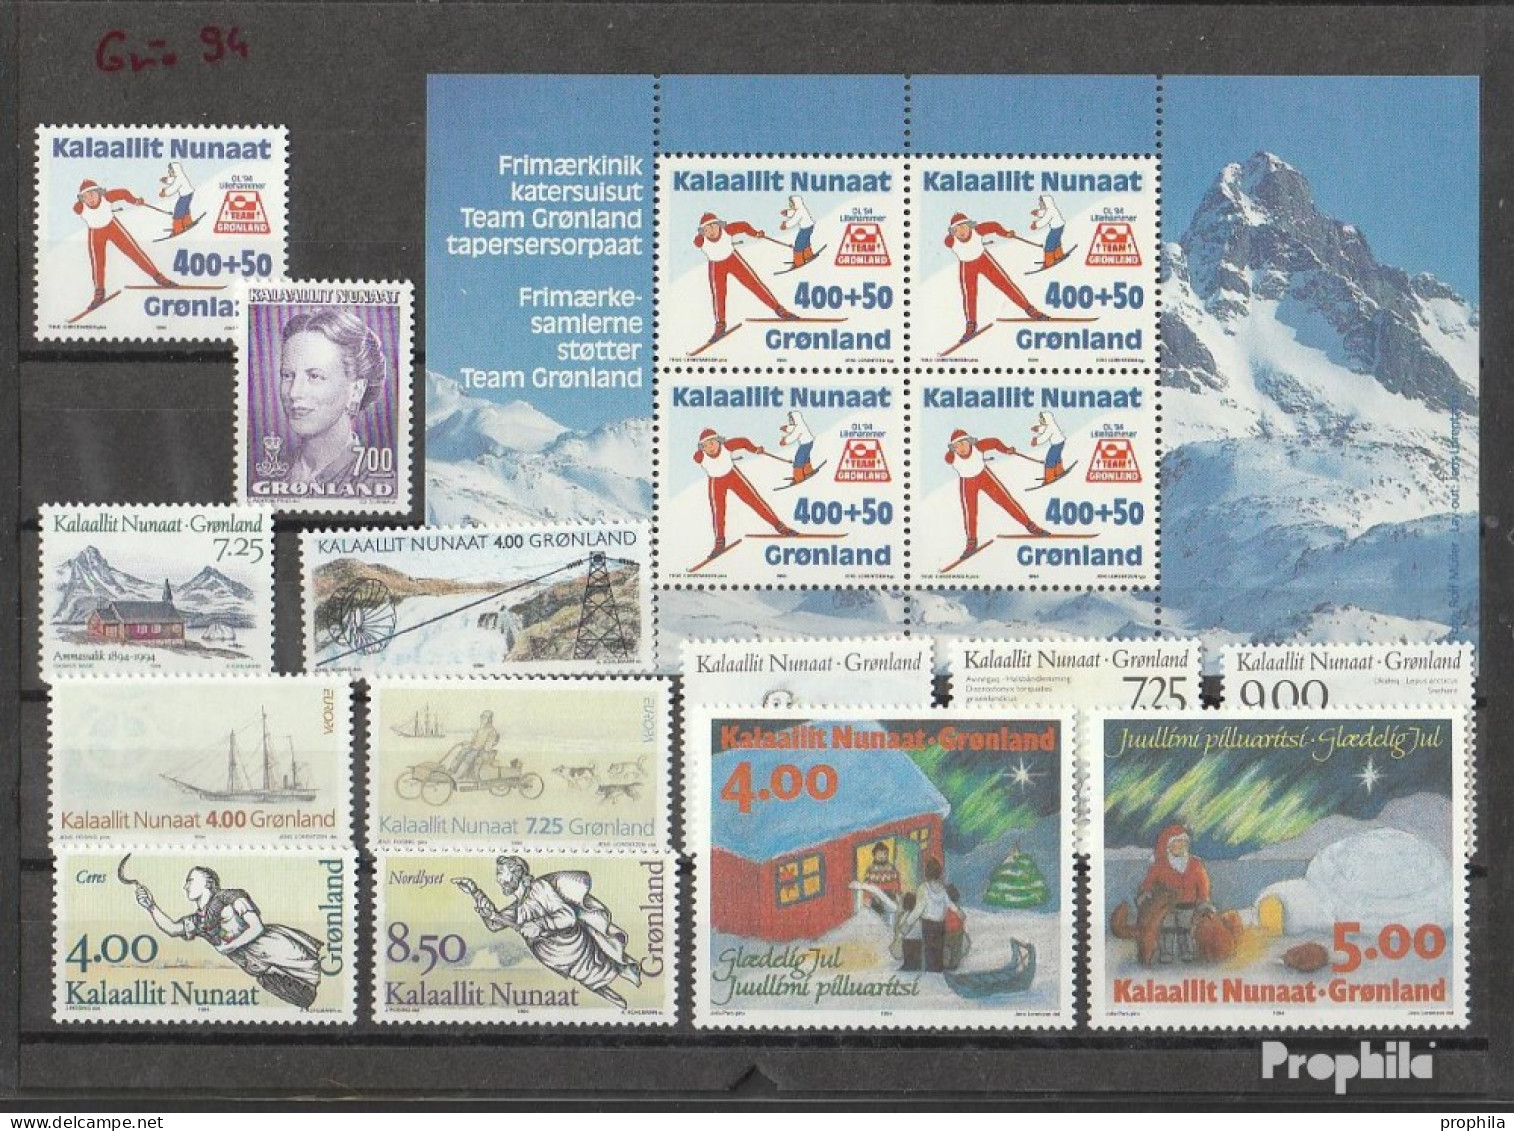 Dänemark - Grönland 1994 Postfrisch Kompletter Jahrgang In Sauberer Erhaltung - Années Complètes